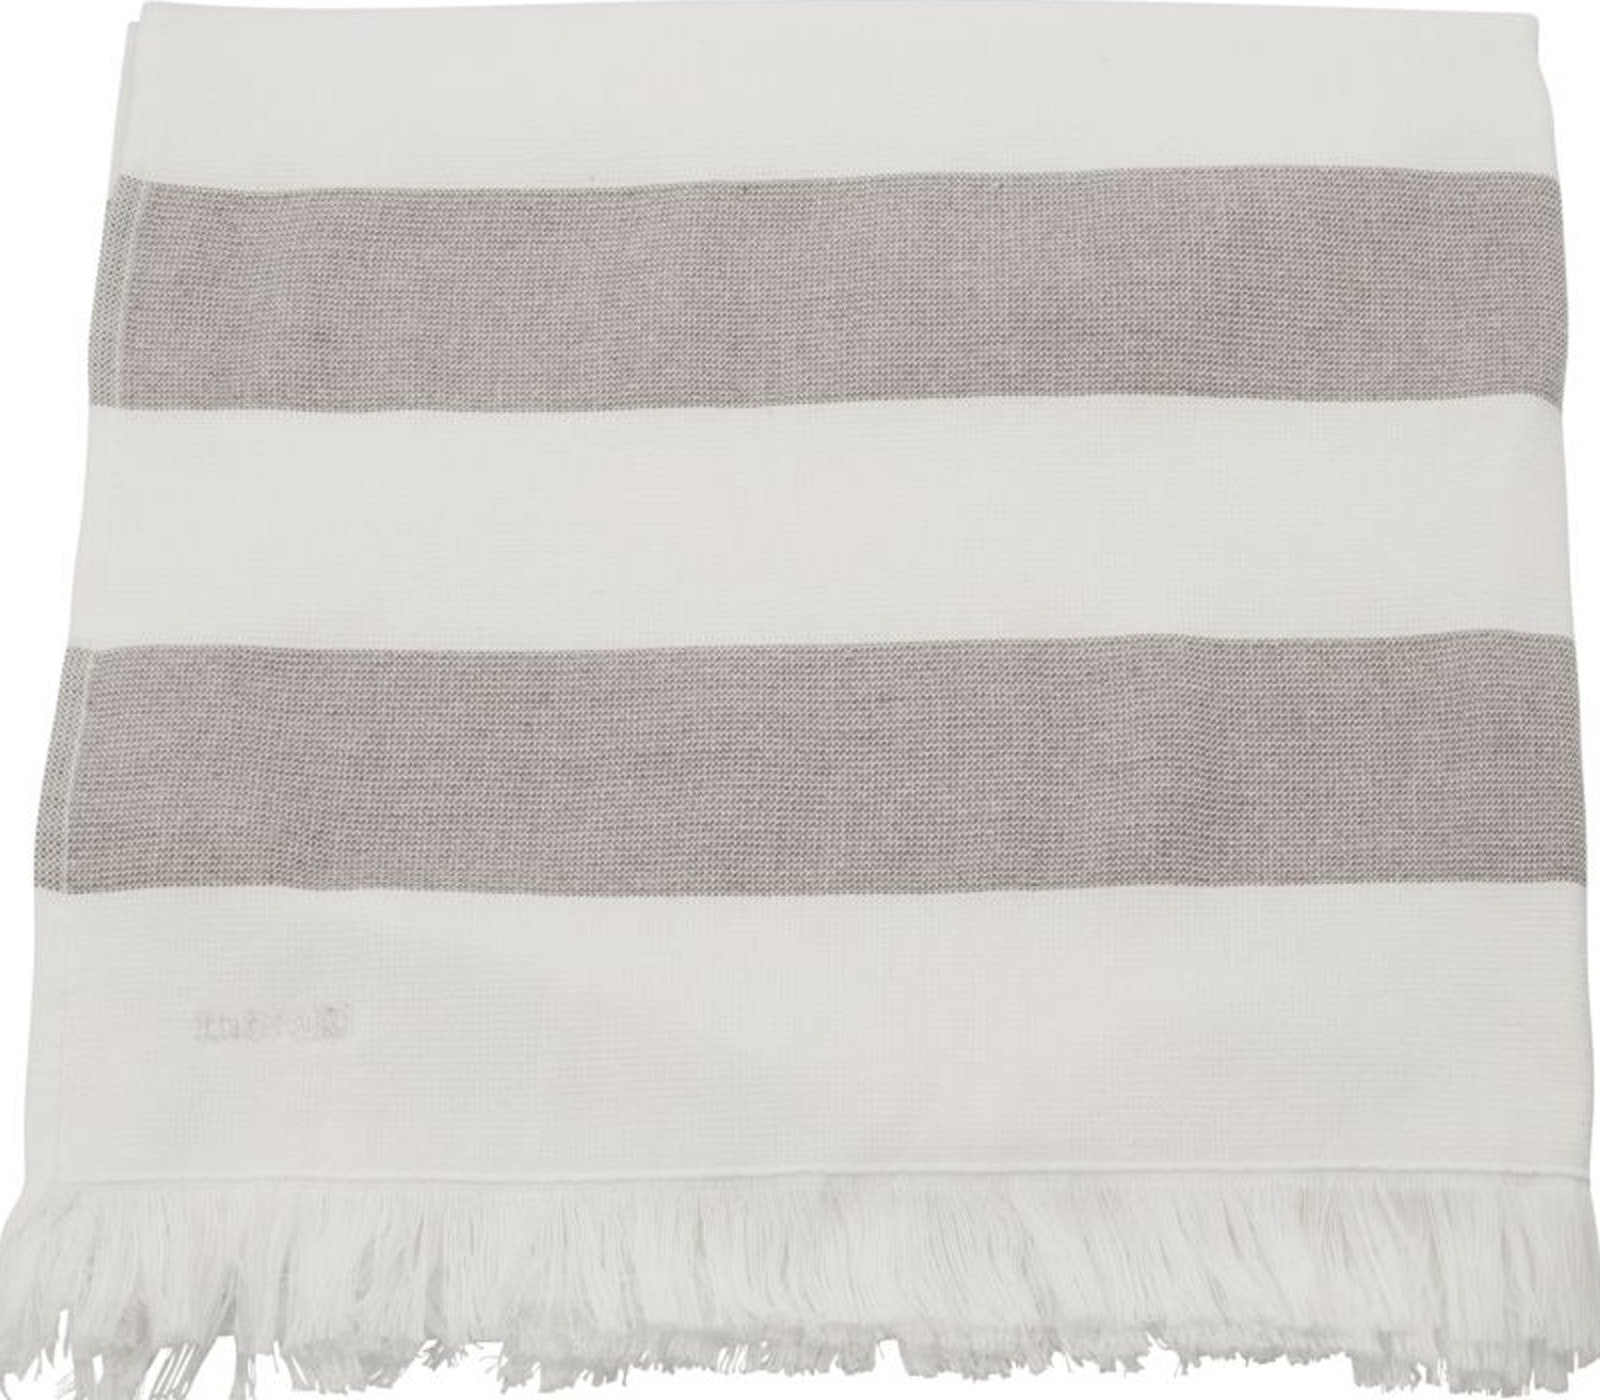 På billedet ser du variationen Barbarum, Håndklæde, Bomuld fra brandet Meraki i en størrelse B: 140 cm. x L: 70 cm. i farven Hvide og brune striber